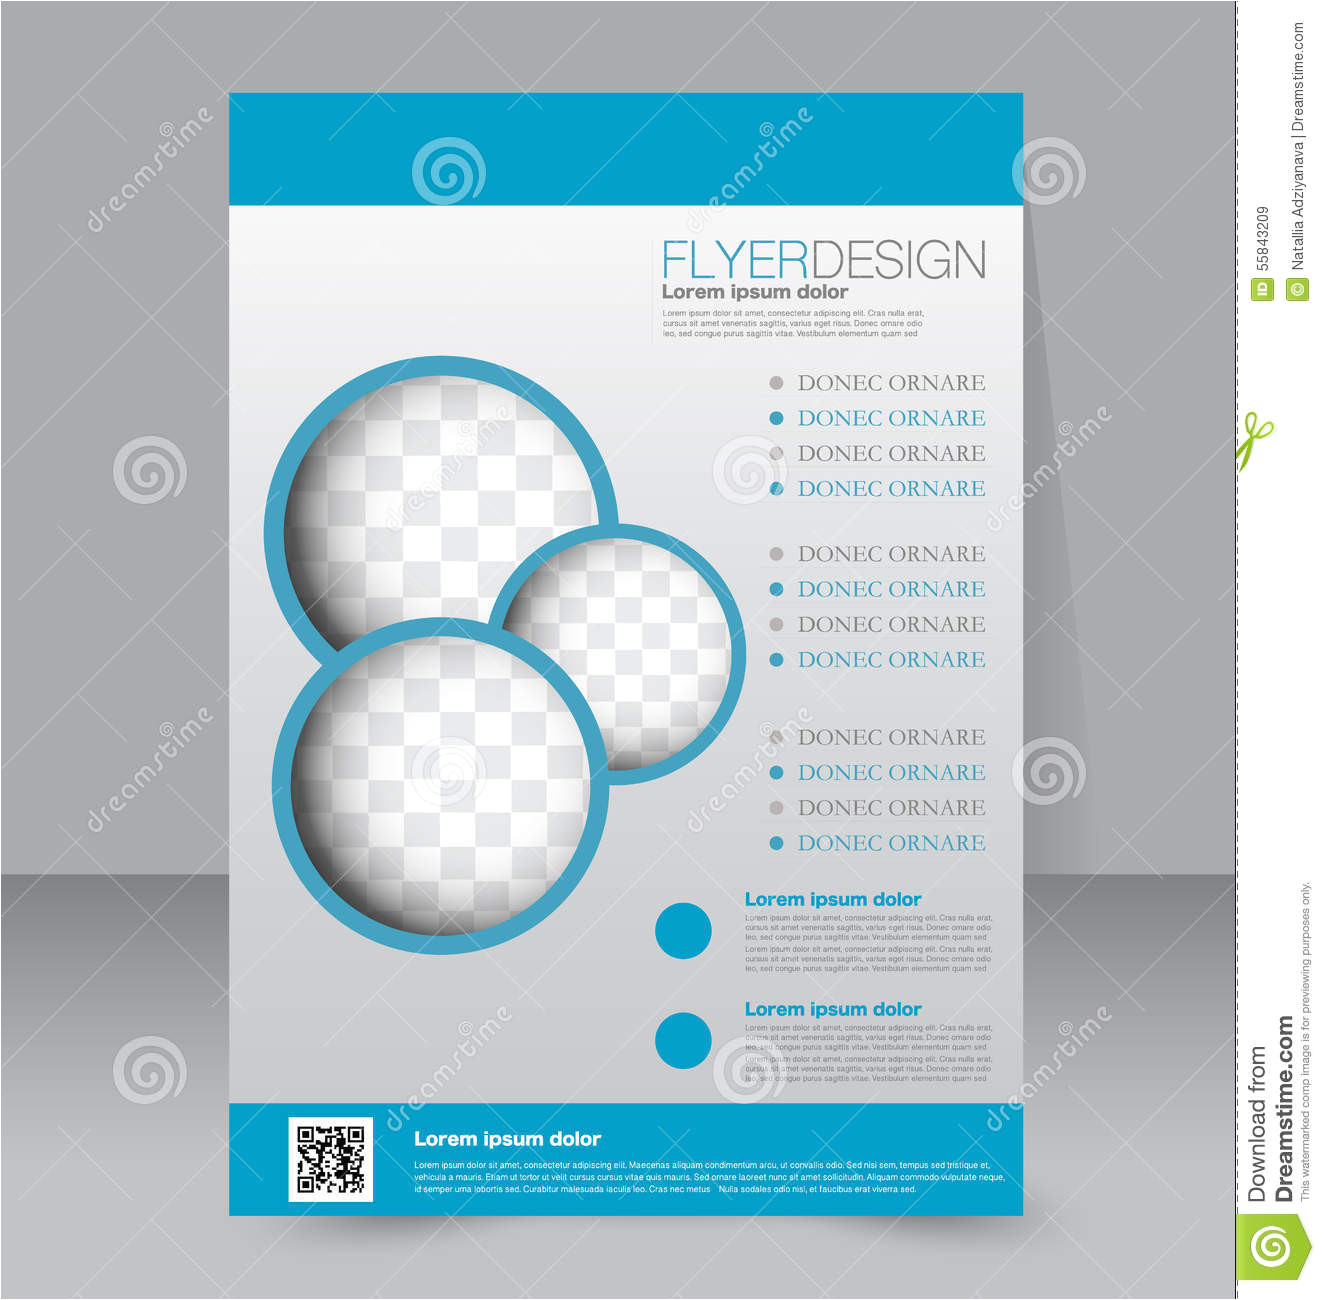 stock illustration flyer template business brochure editable poster design education presentation website magazine cover blue color image55843209